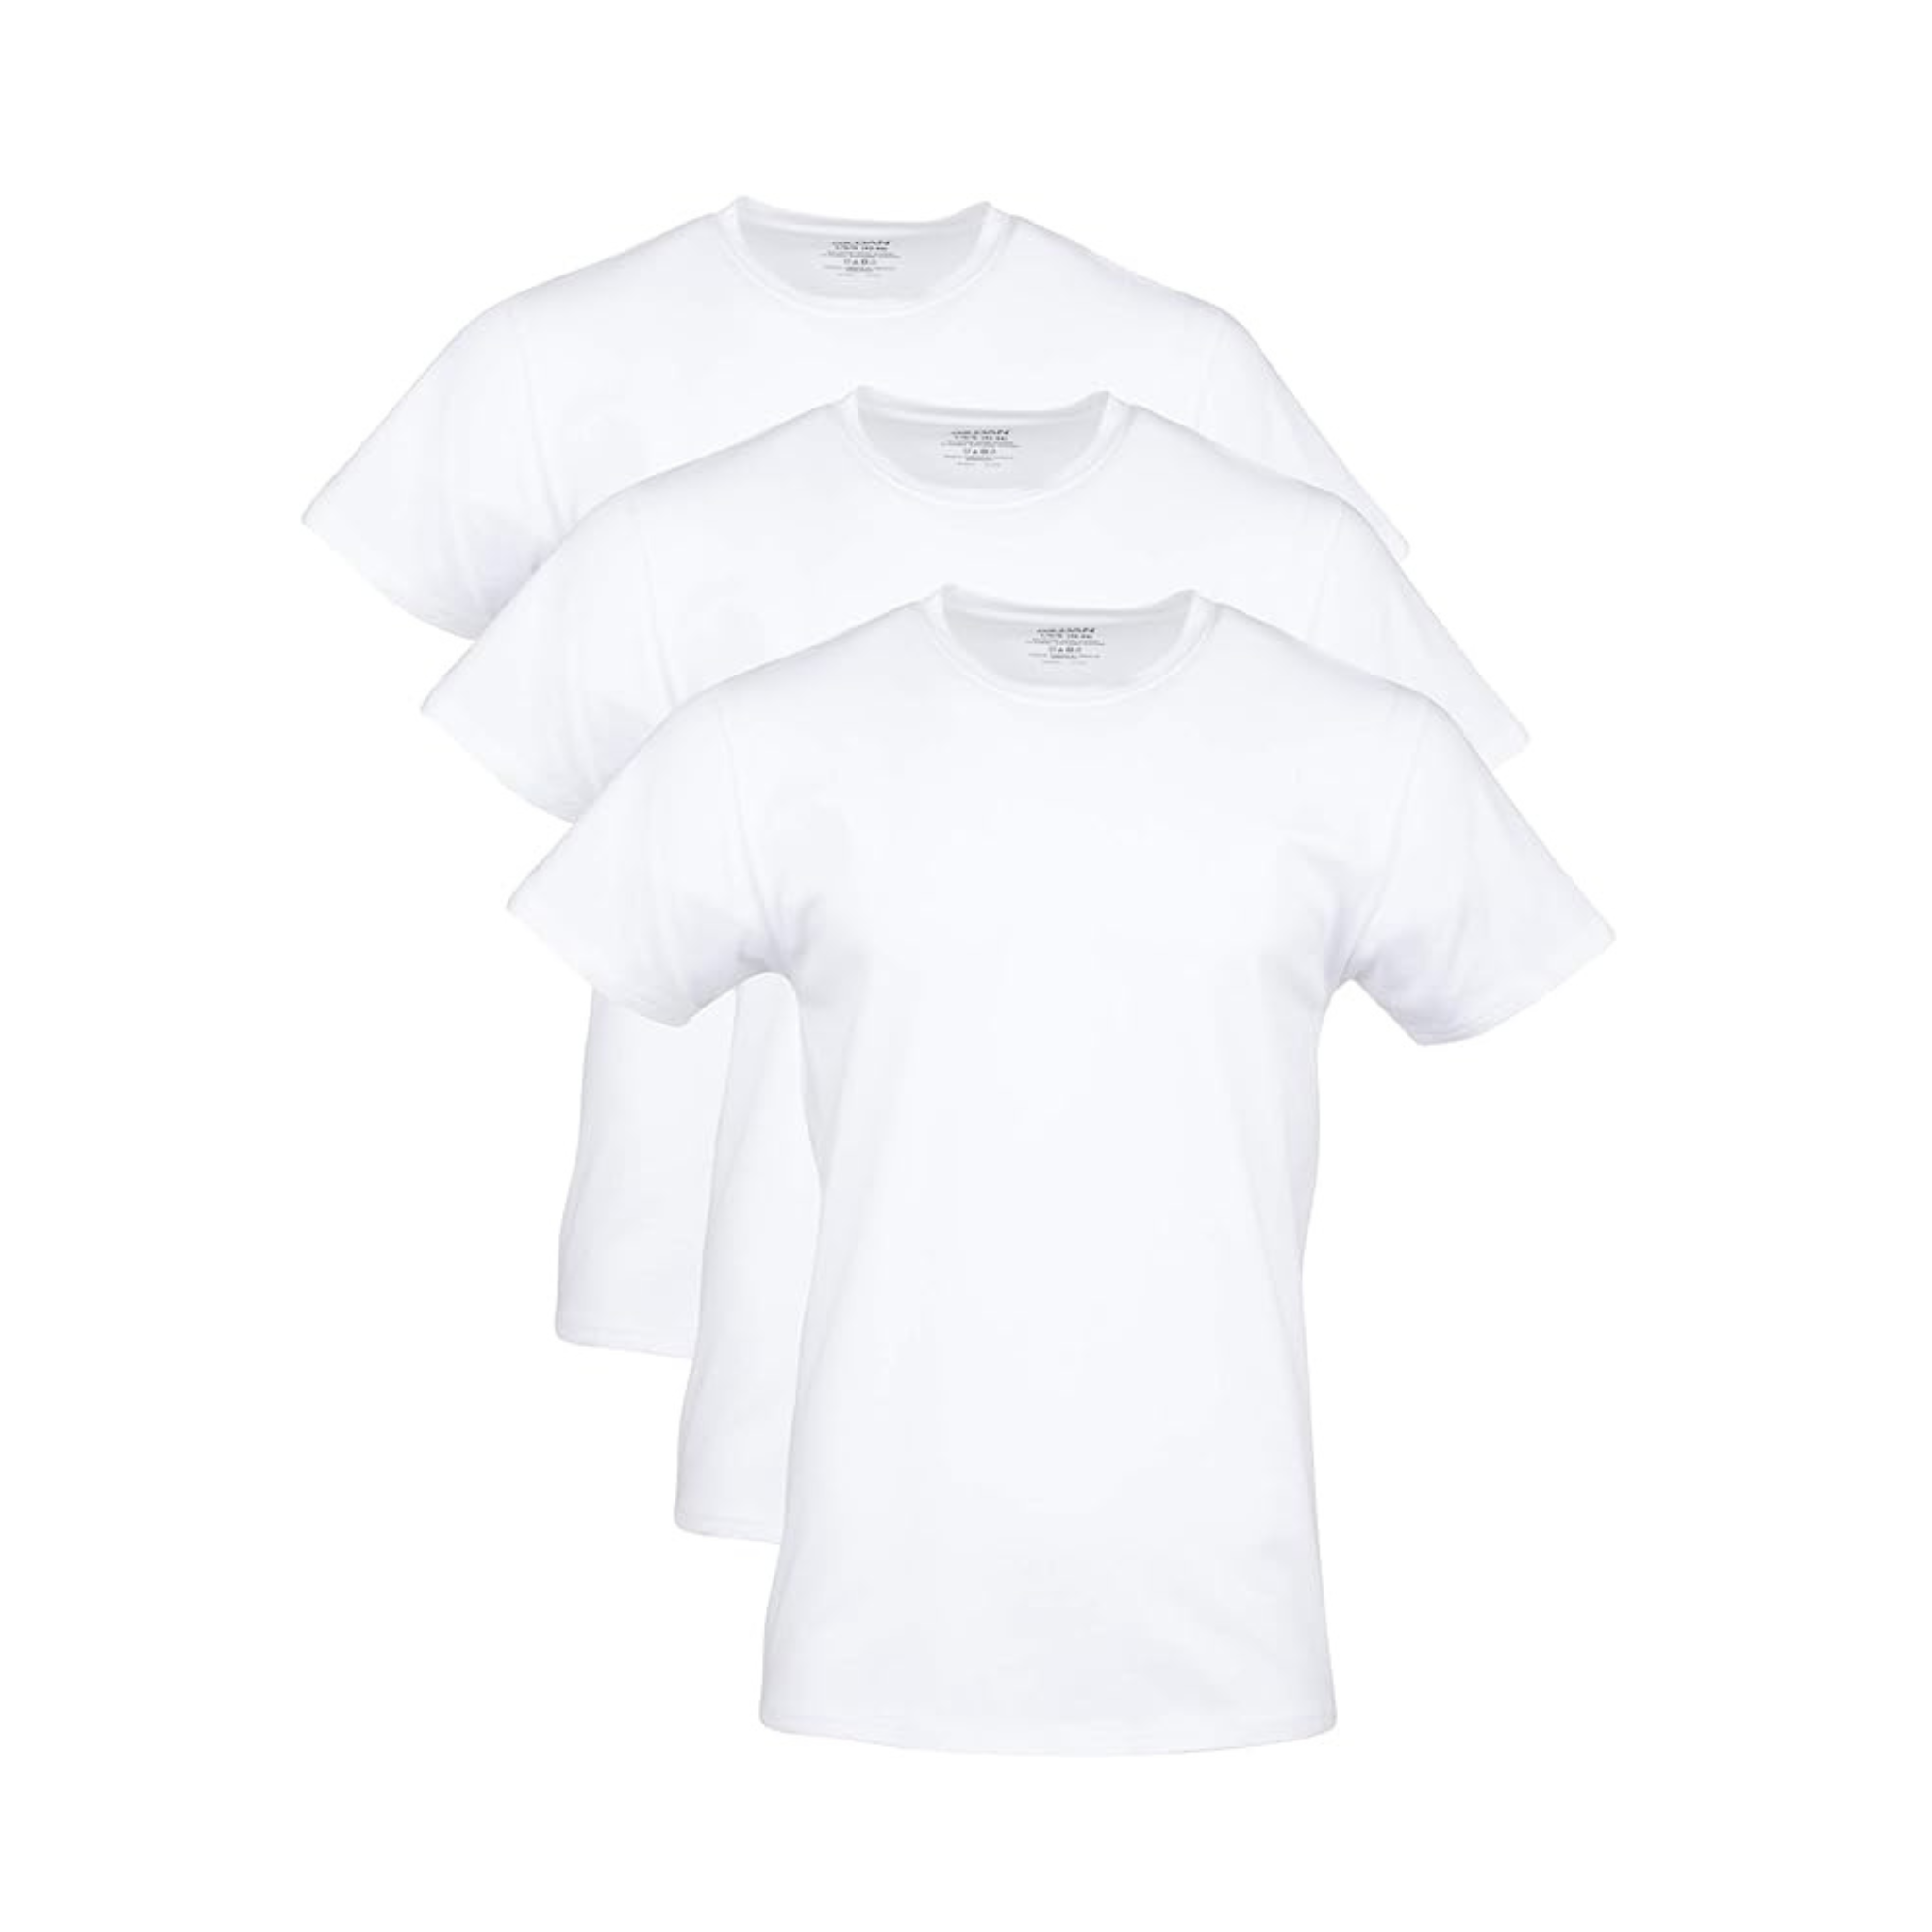 3-Pack Gildan Men's Cotton Stretch Crew T-Shirts